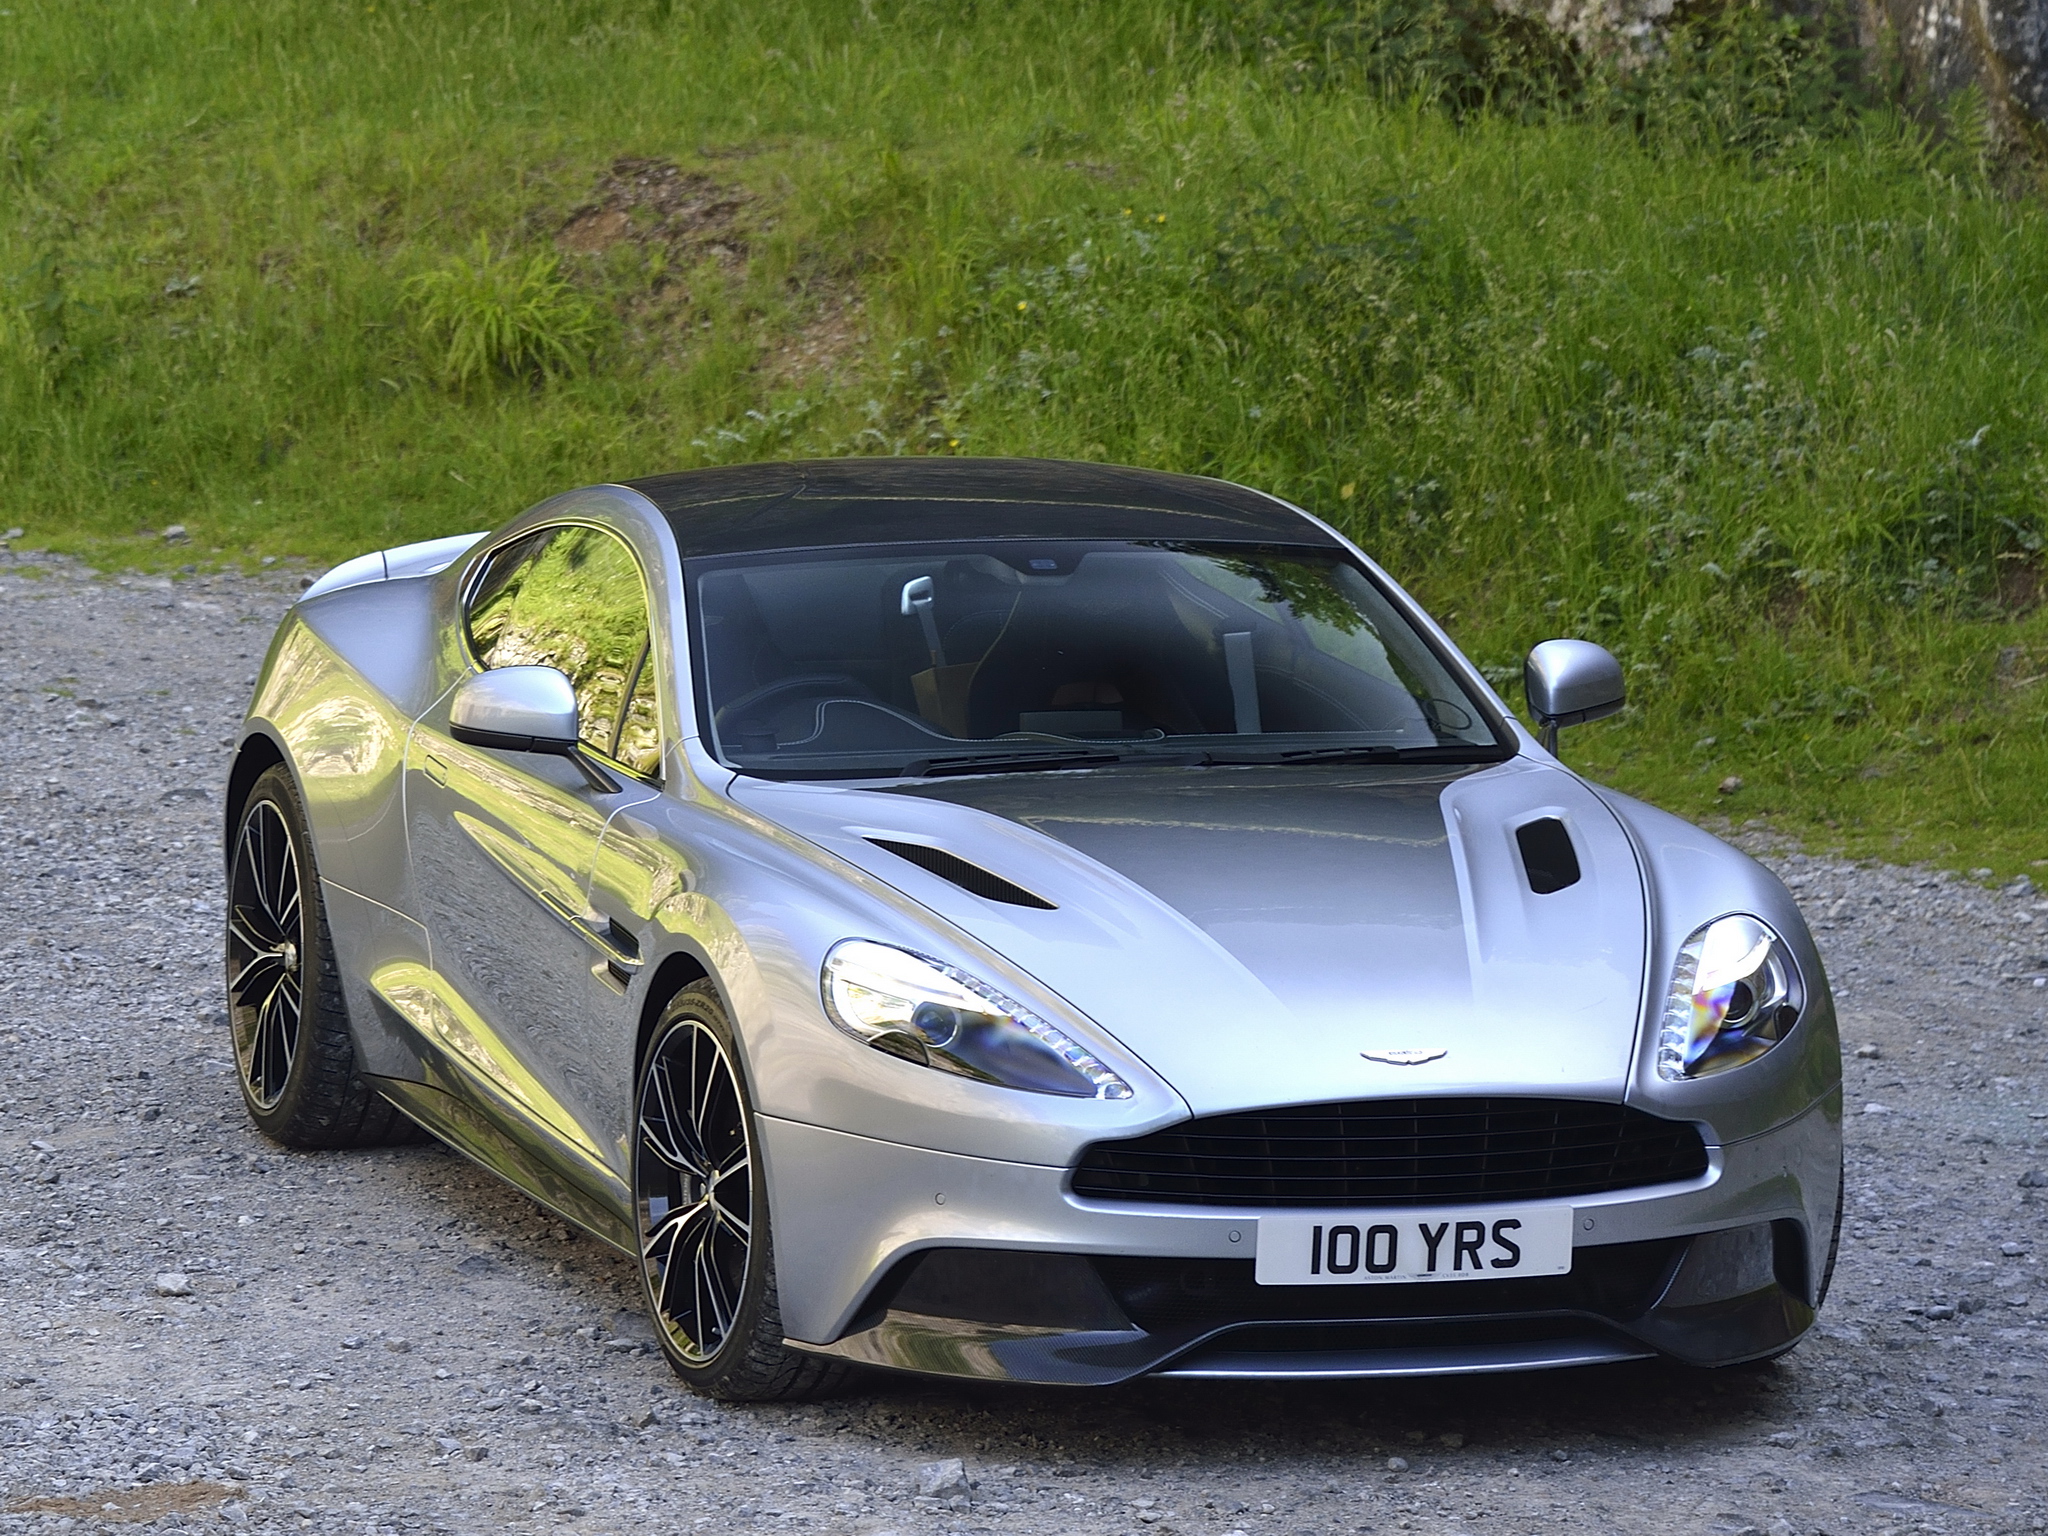 Luxury Redefined: The Aston Martin Vanquish Centenary Edition